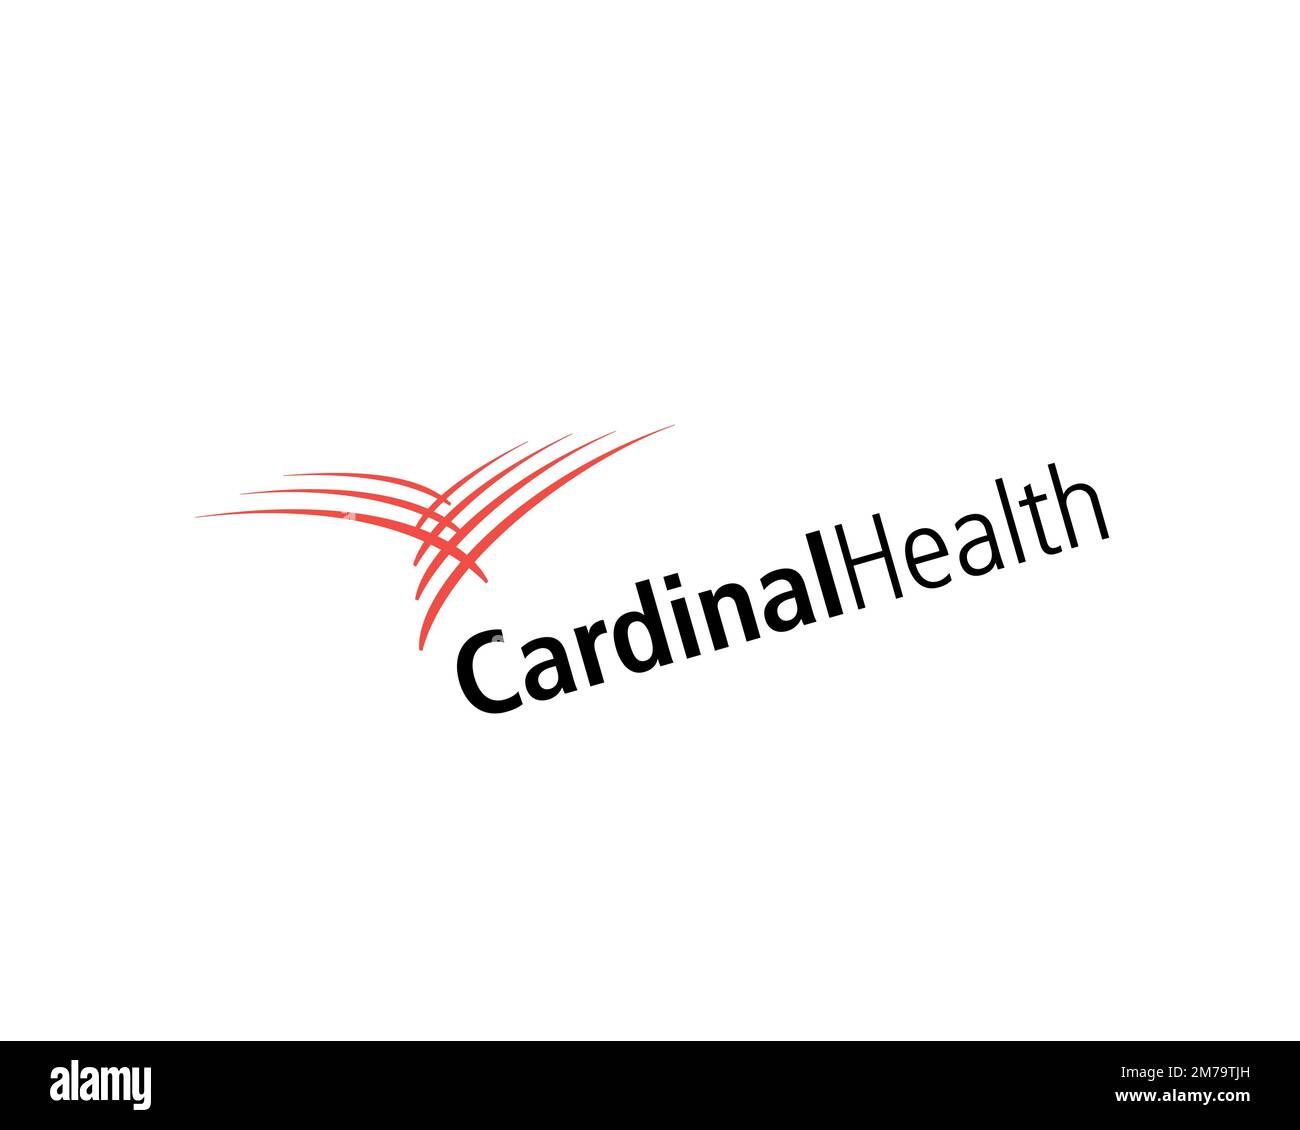 Cardinal Health, Rotated Logo, White Background Stock Photo